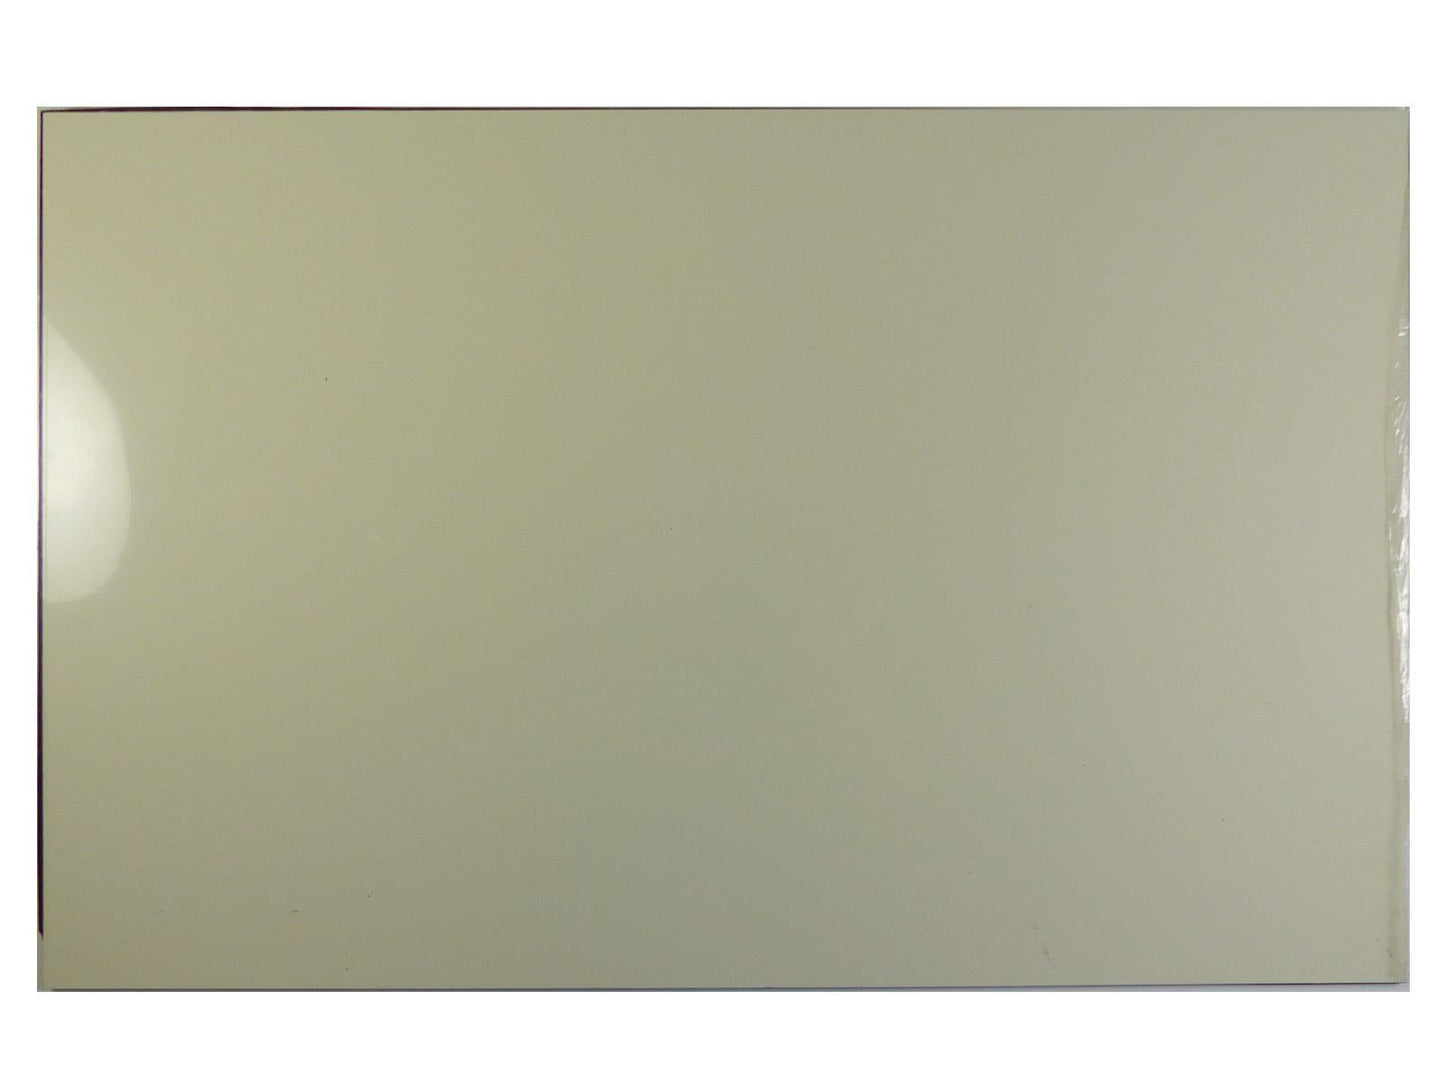 Borderlands Mint Green Plain PVC Sheet - 430x290x2mm (16.9x11.42x0.08"), 3-Ply